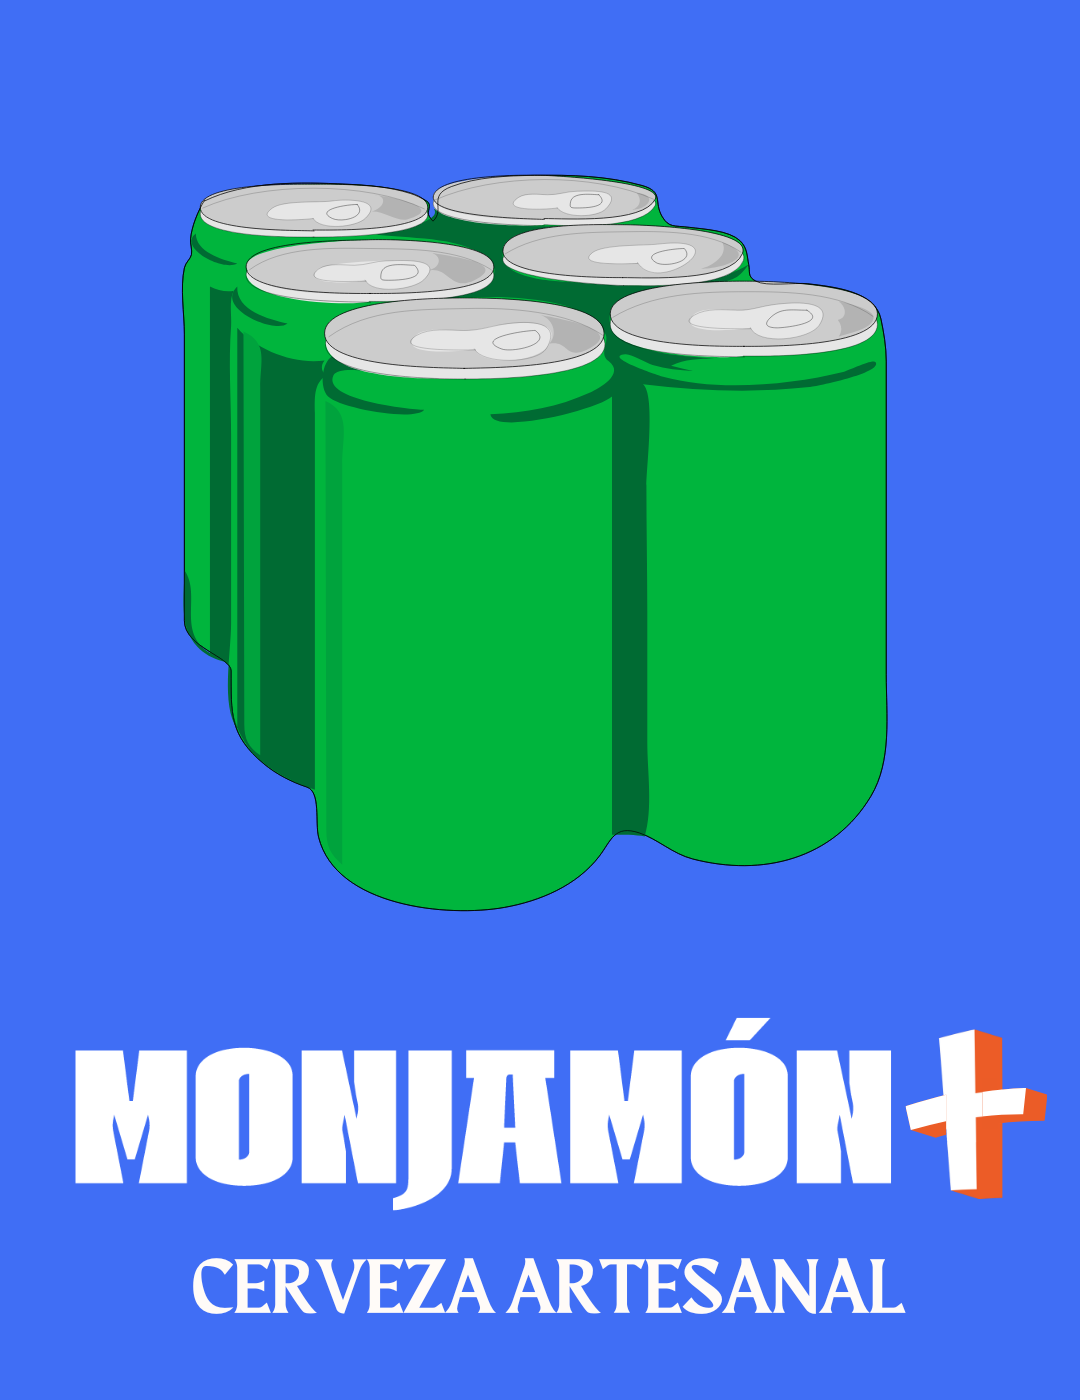 Monjamón + Cerveza - Suscripción a Cerveza Artesanal